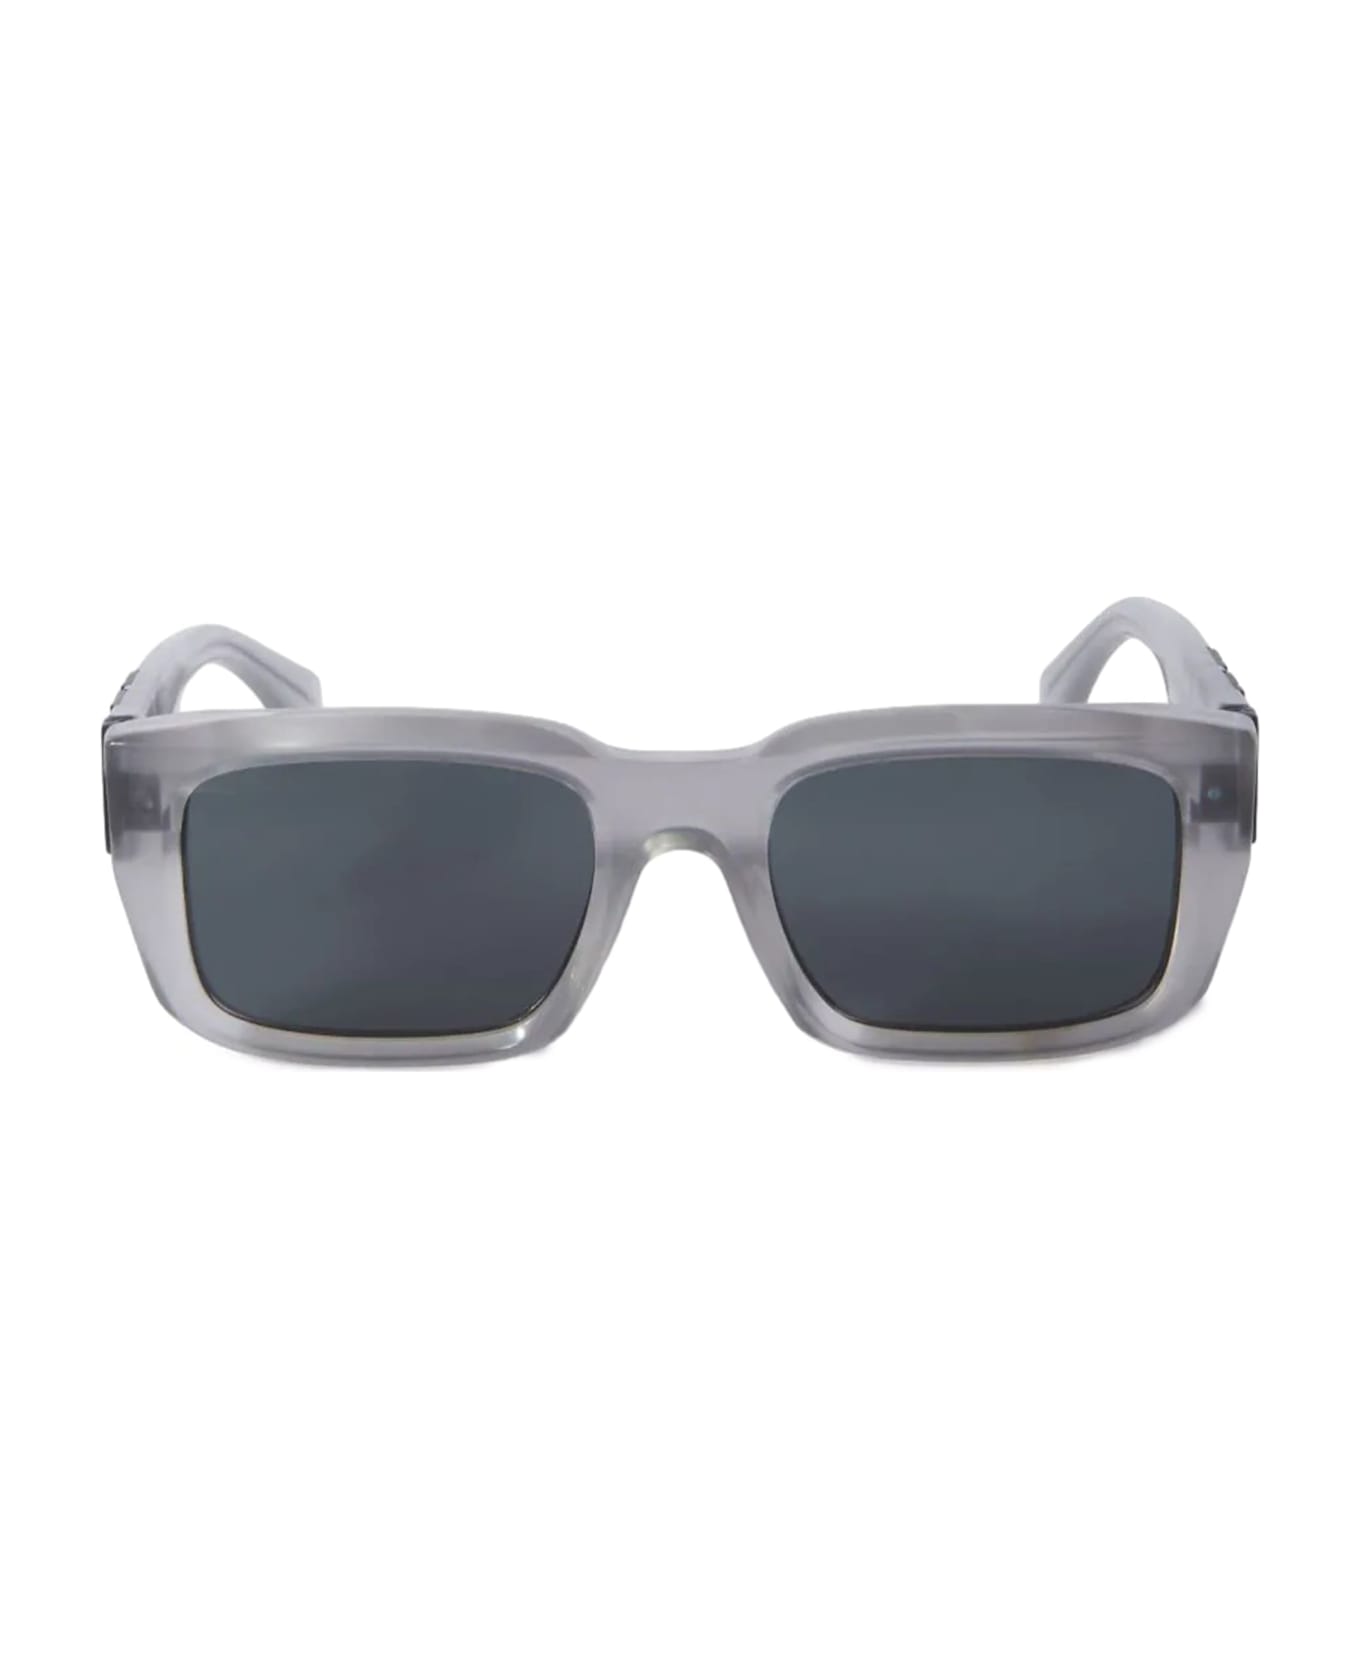 Off-White Hays Sunglasses - grey